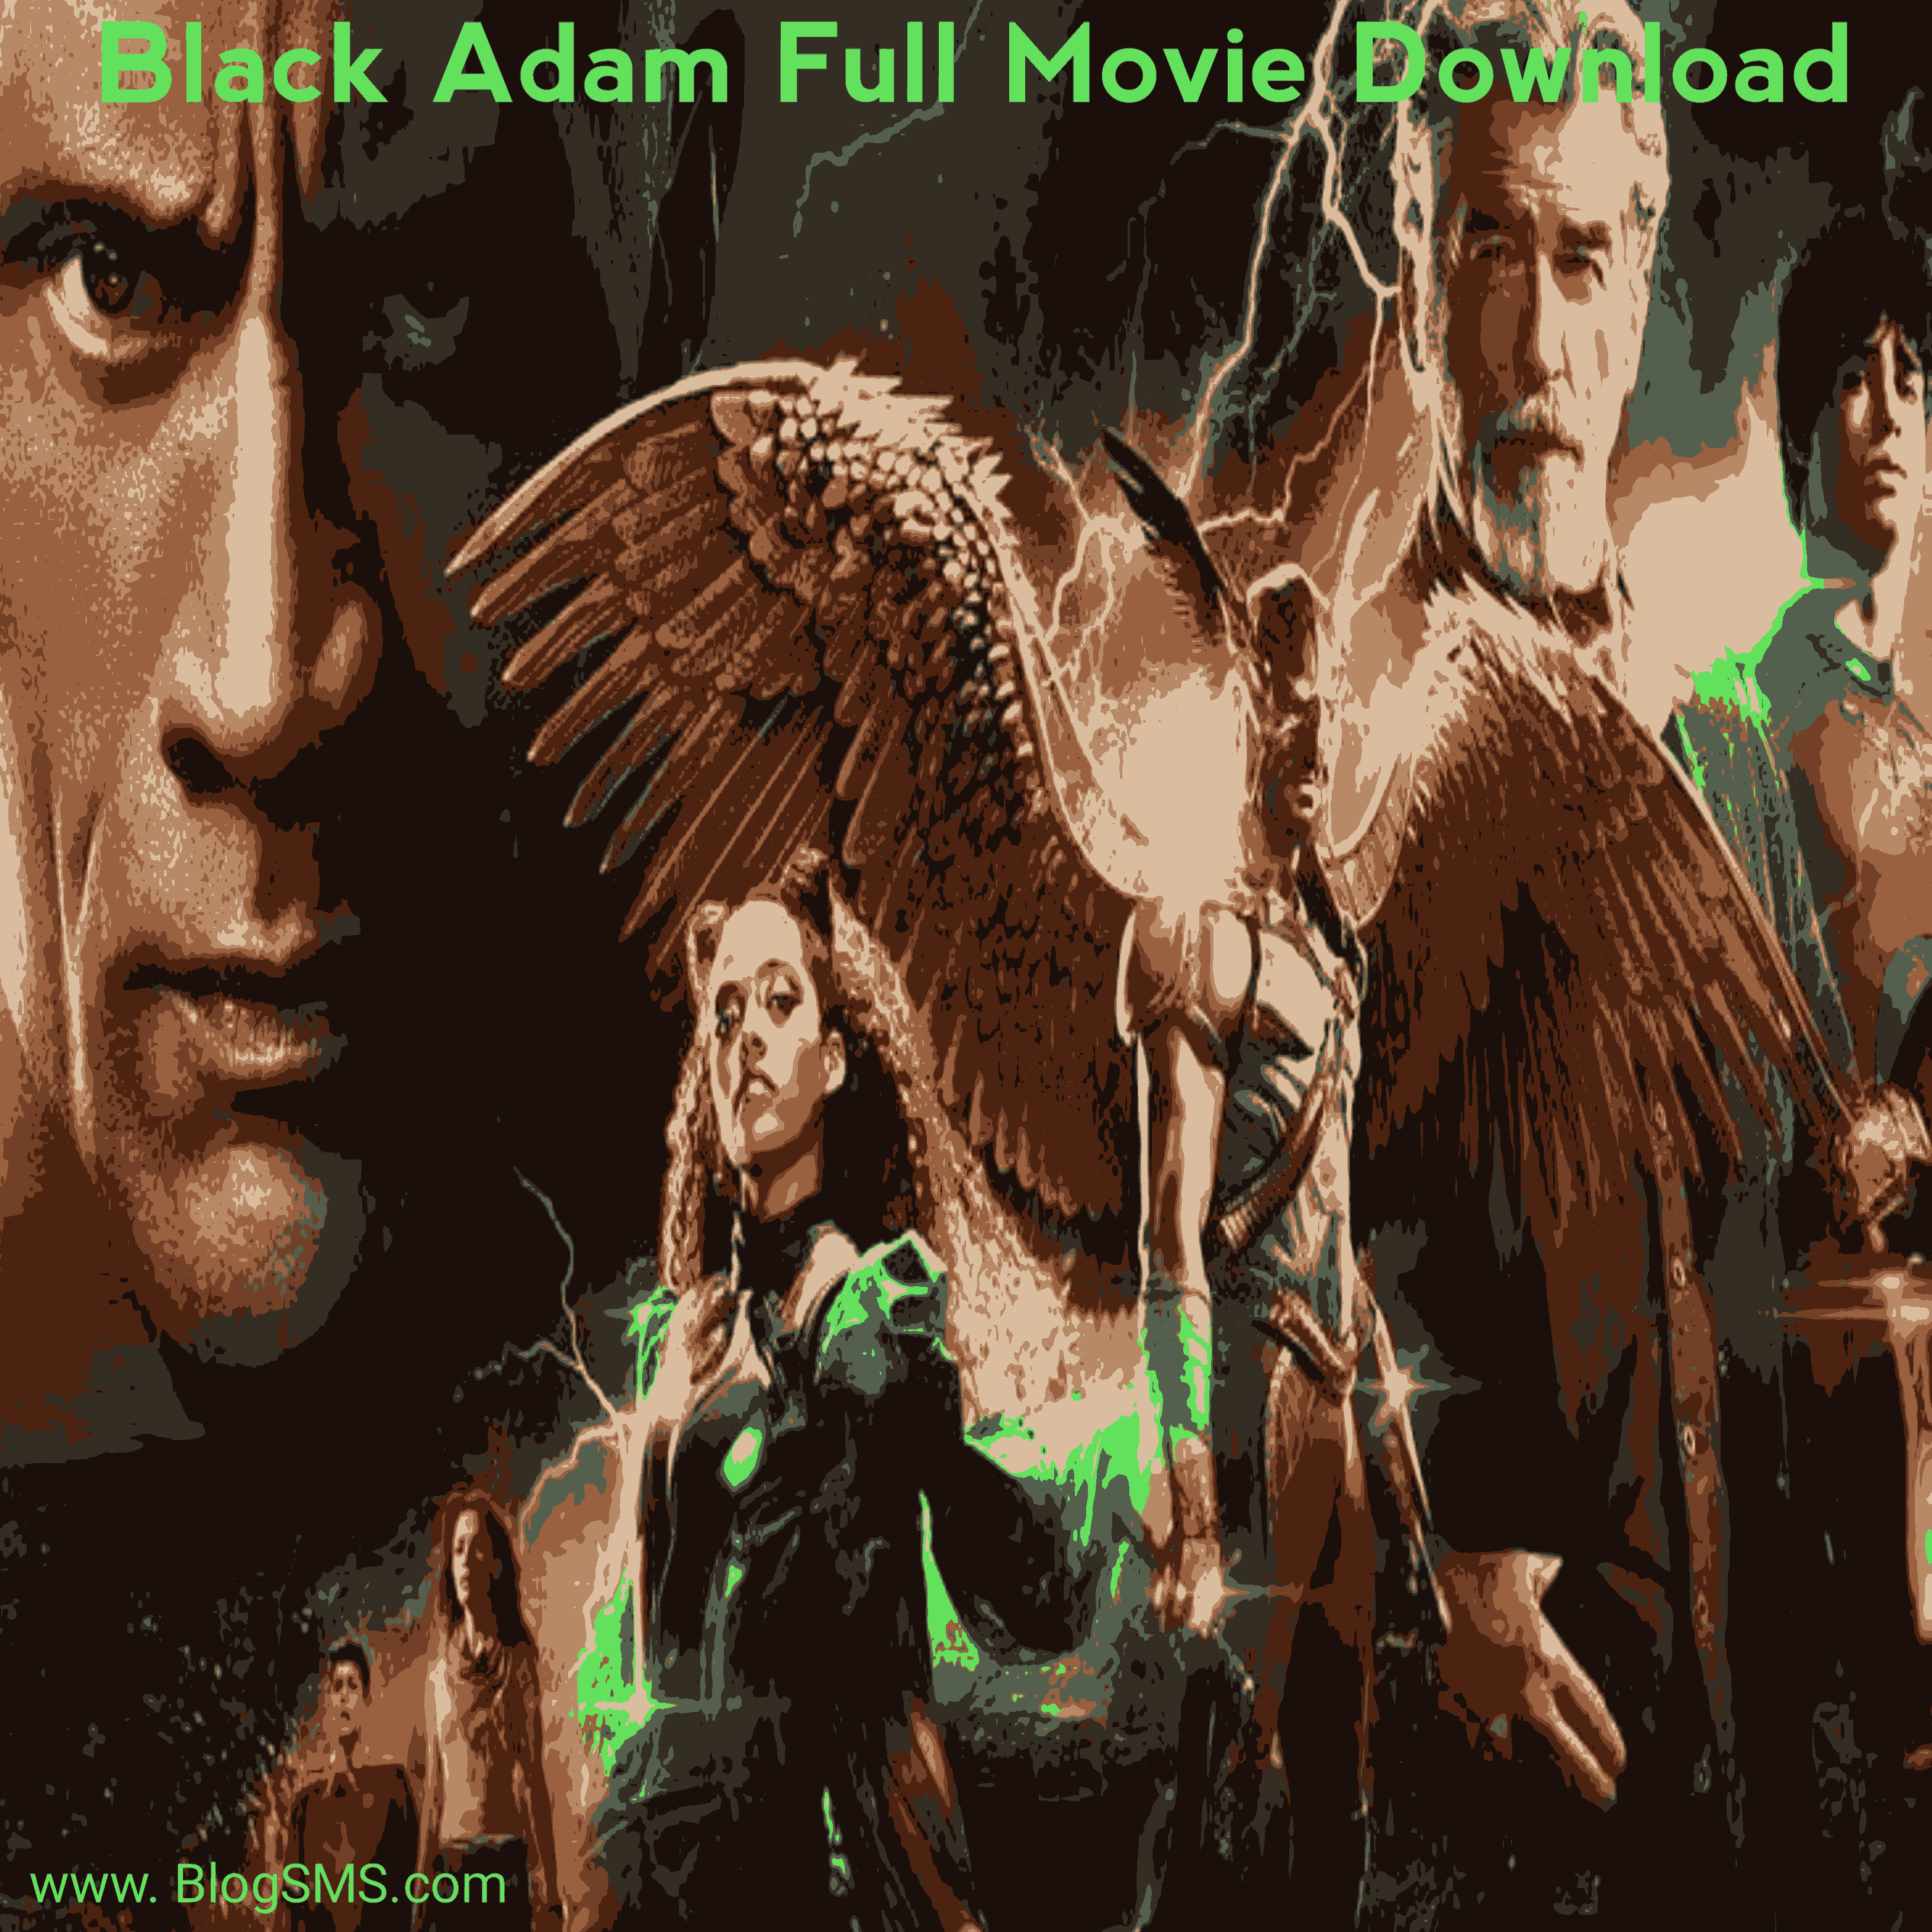 Black Adam Movie Download Hindi dubbed Free HD [480p 720p 1080p] Telegram Link